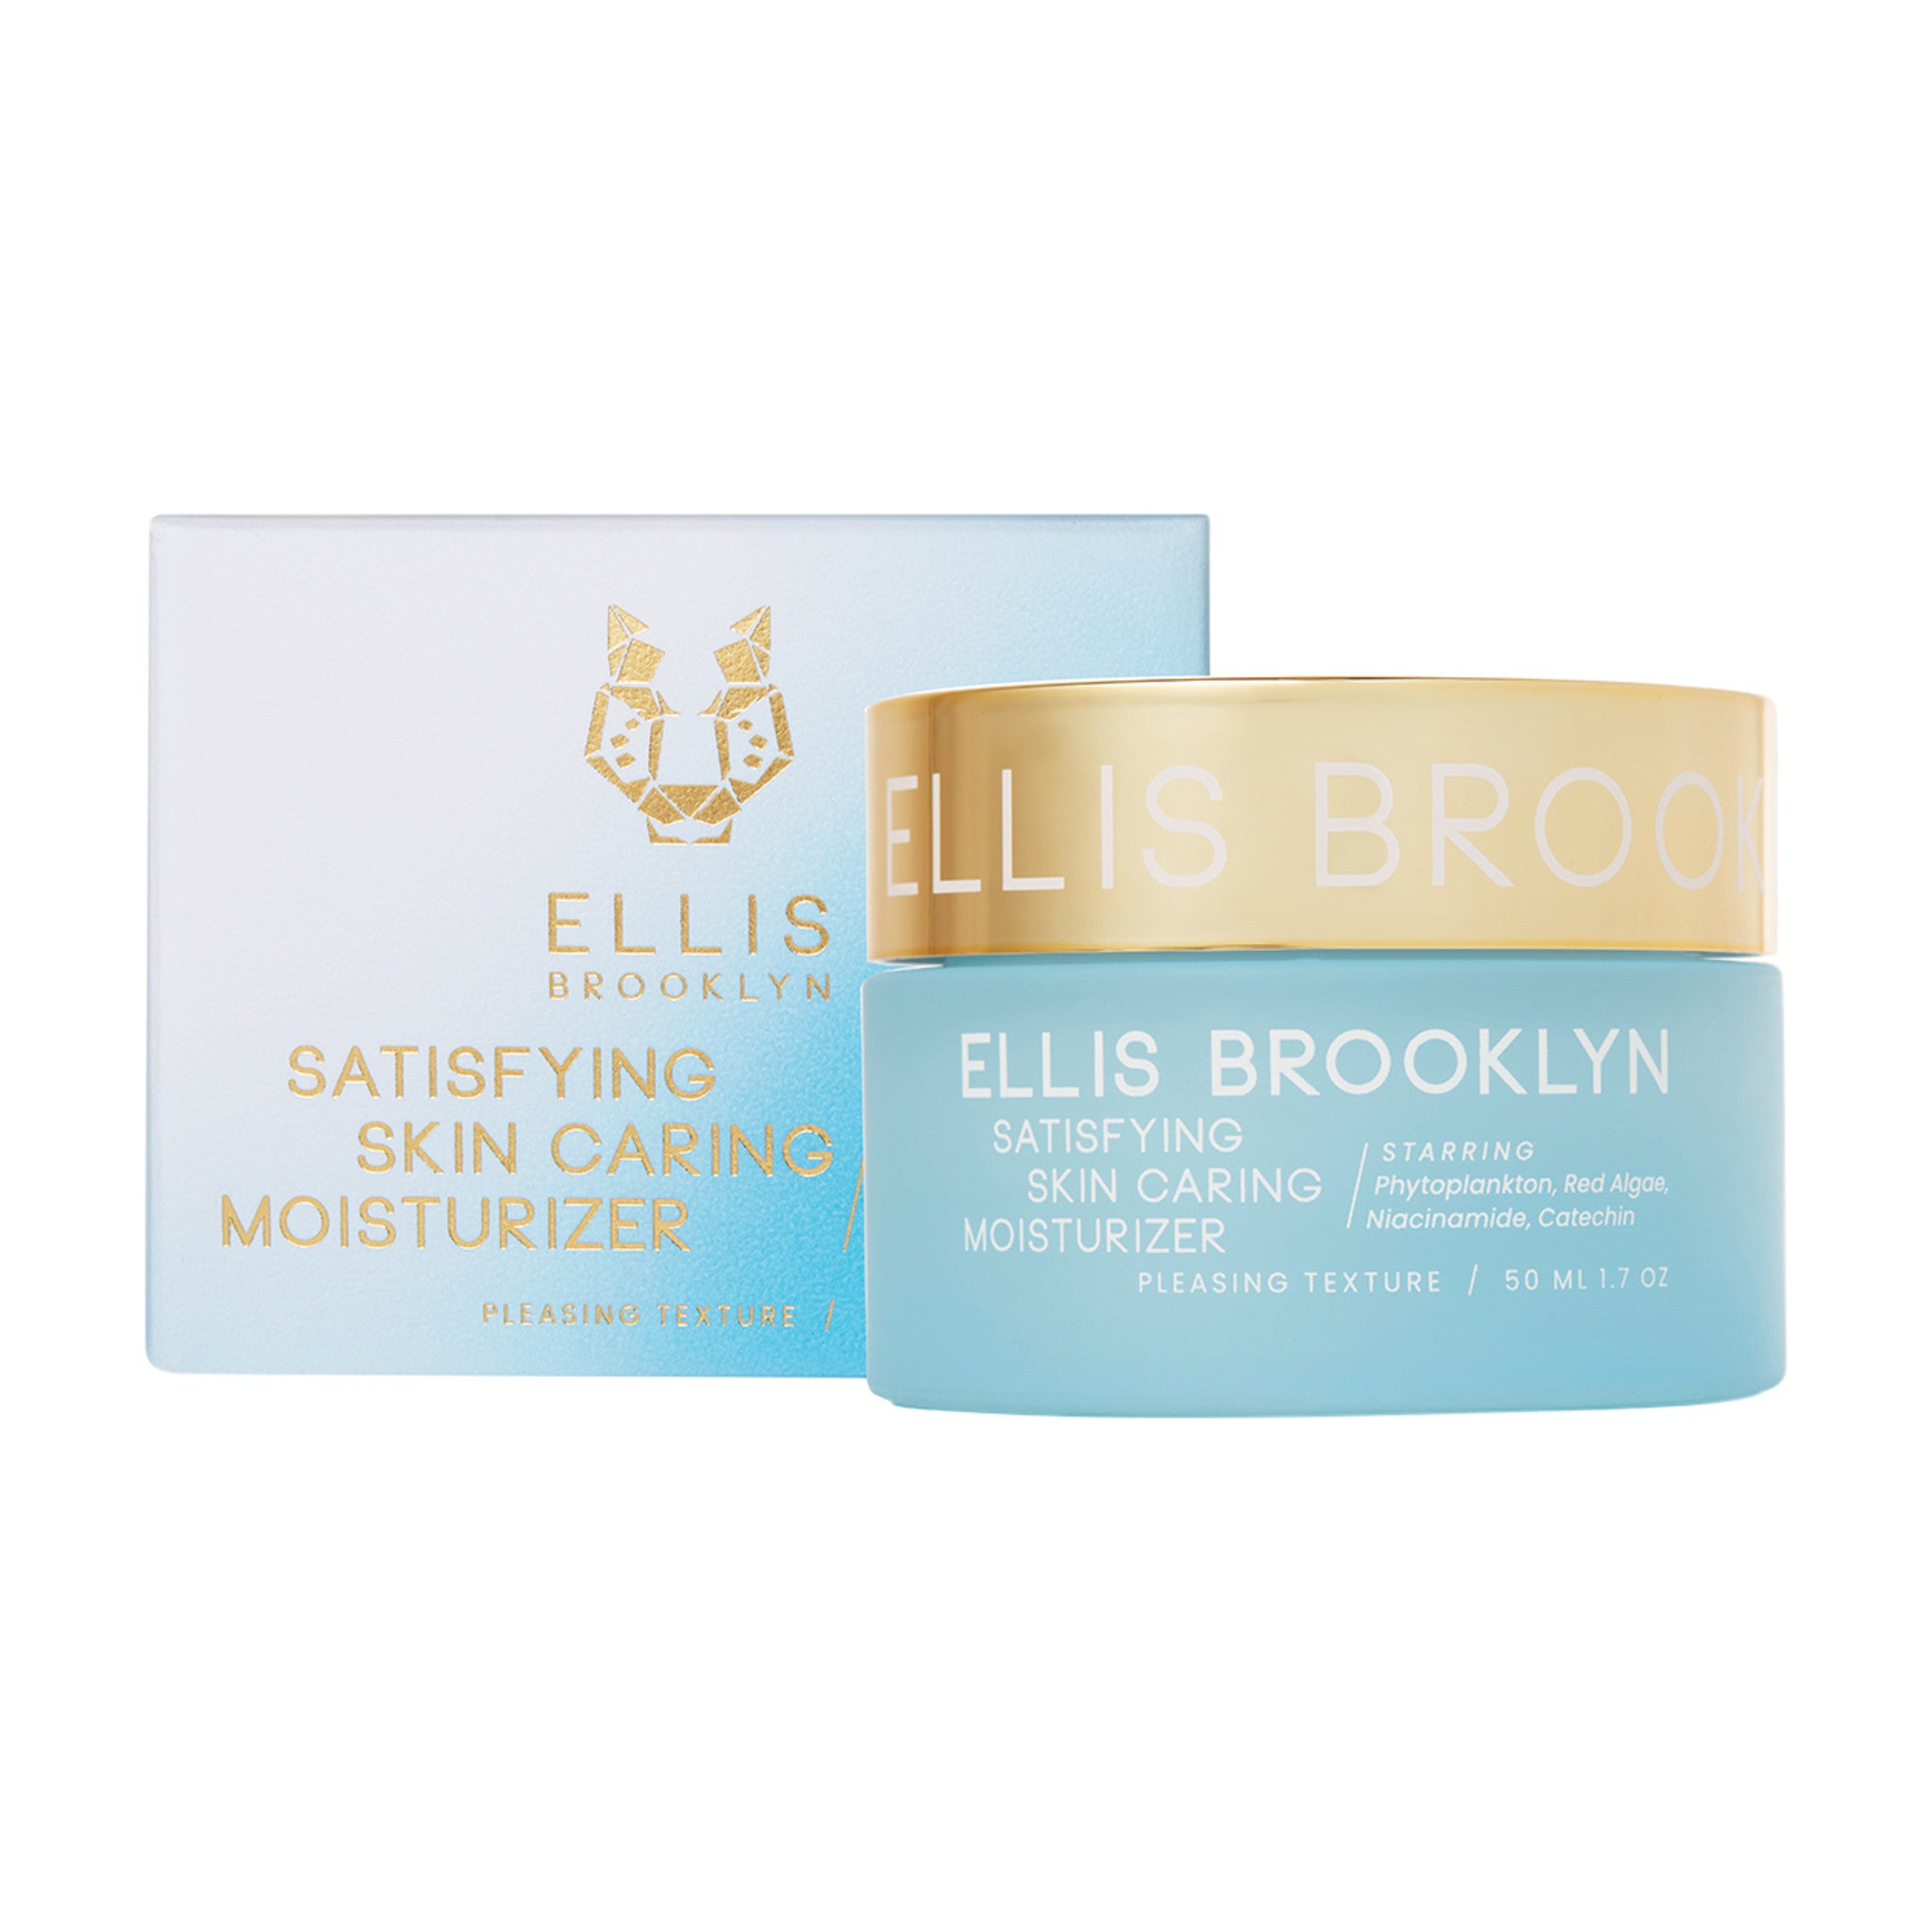 Ellis Brooklyn Satisfying Skin Caring Moisturizer main image.